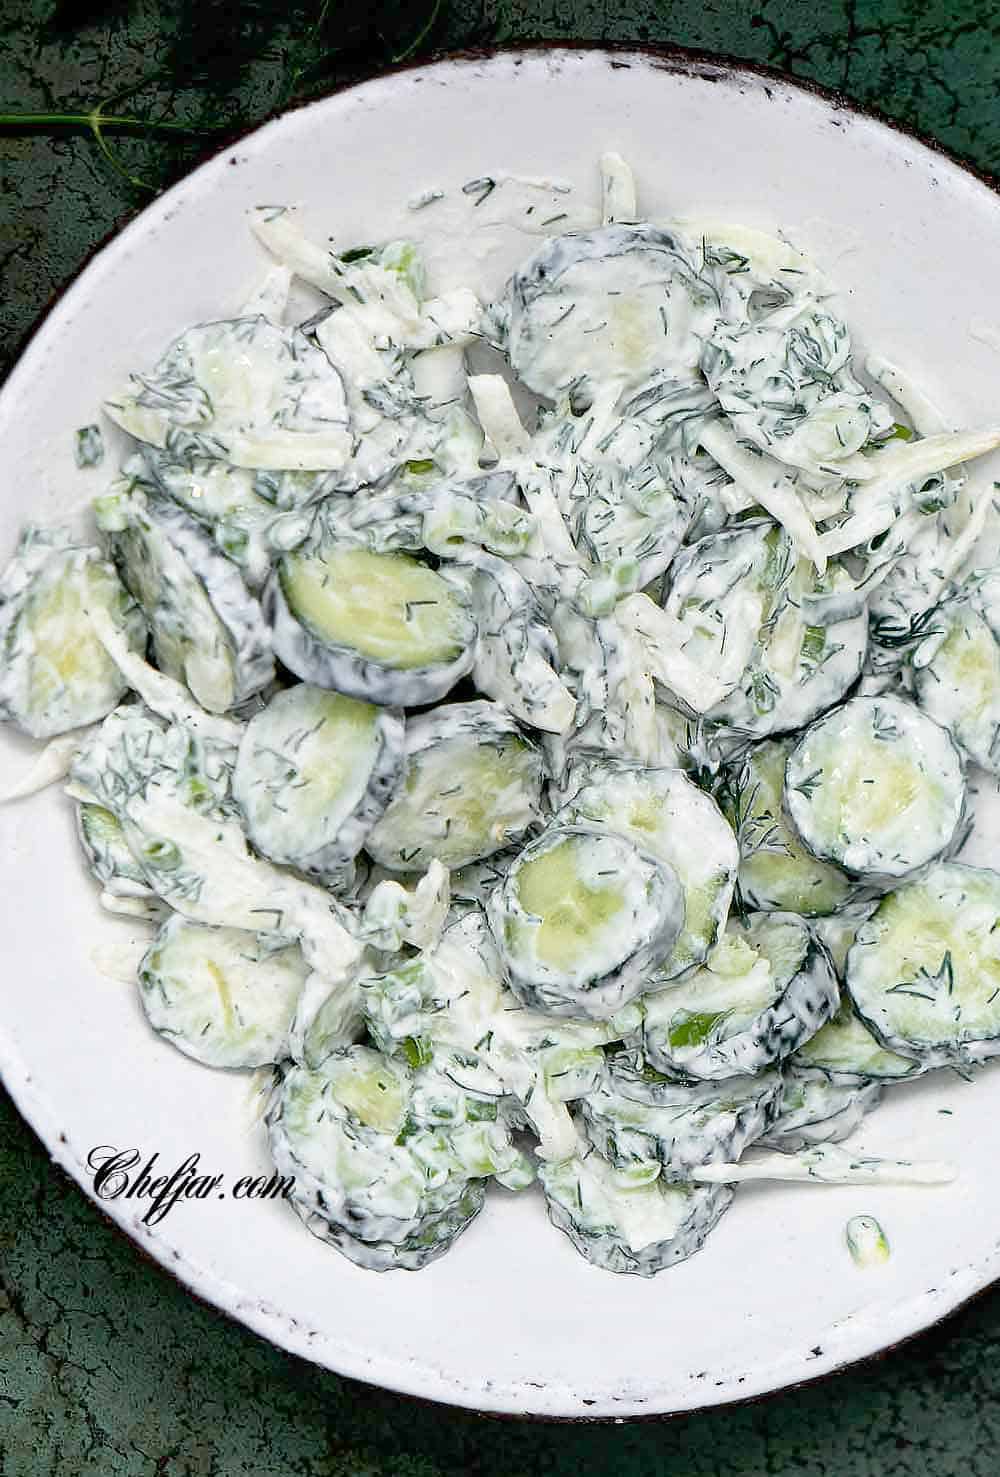 creamy-cucumber-salad